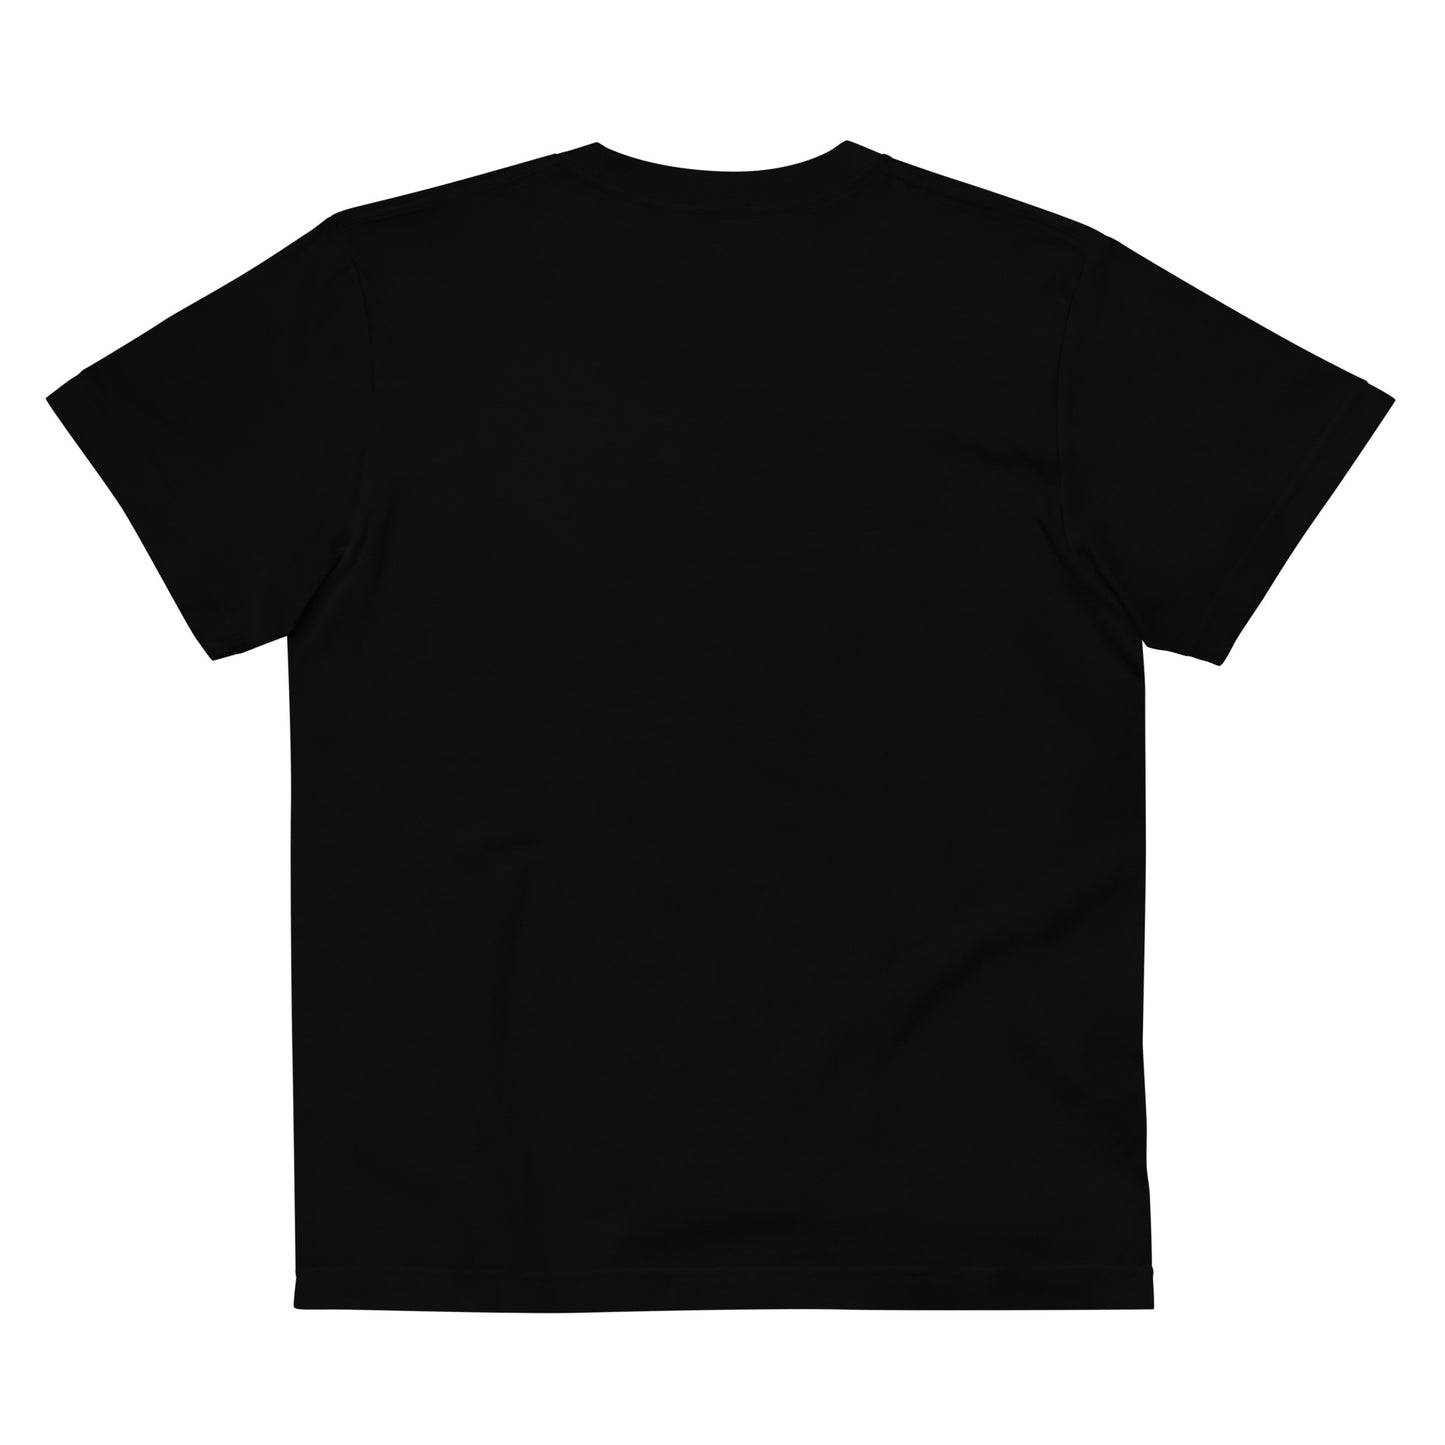 E035 - T-shirt/Regular fit (MX win : Black/Silver)